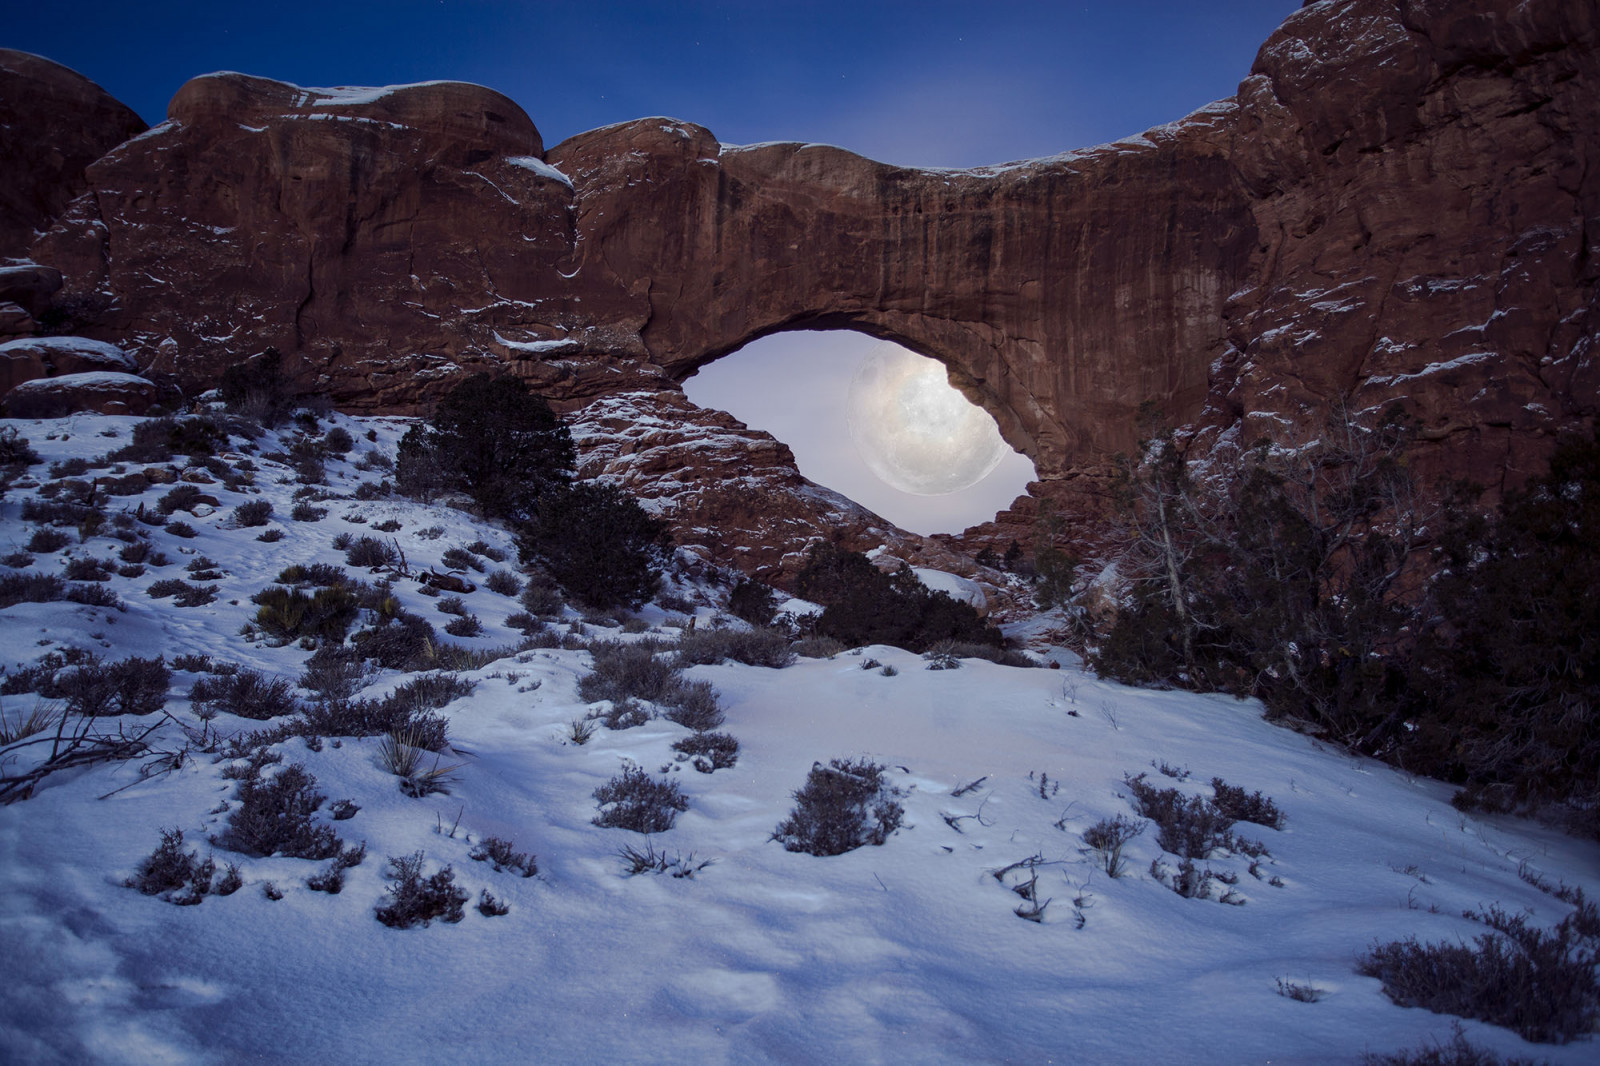 longexposure_nightphotography_winter_snow_night_landscape_utah_sandstone-953609.jpg!d